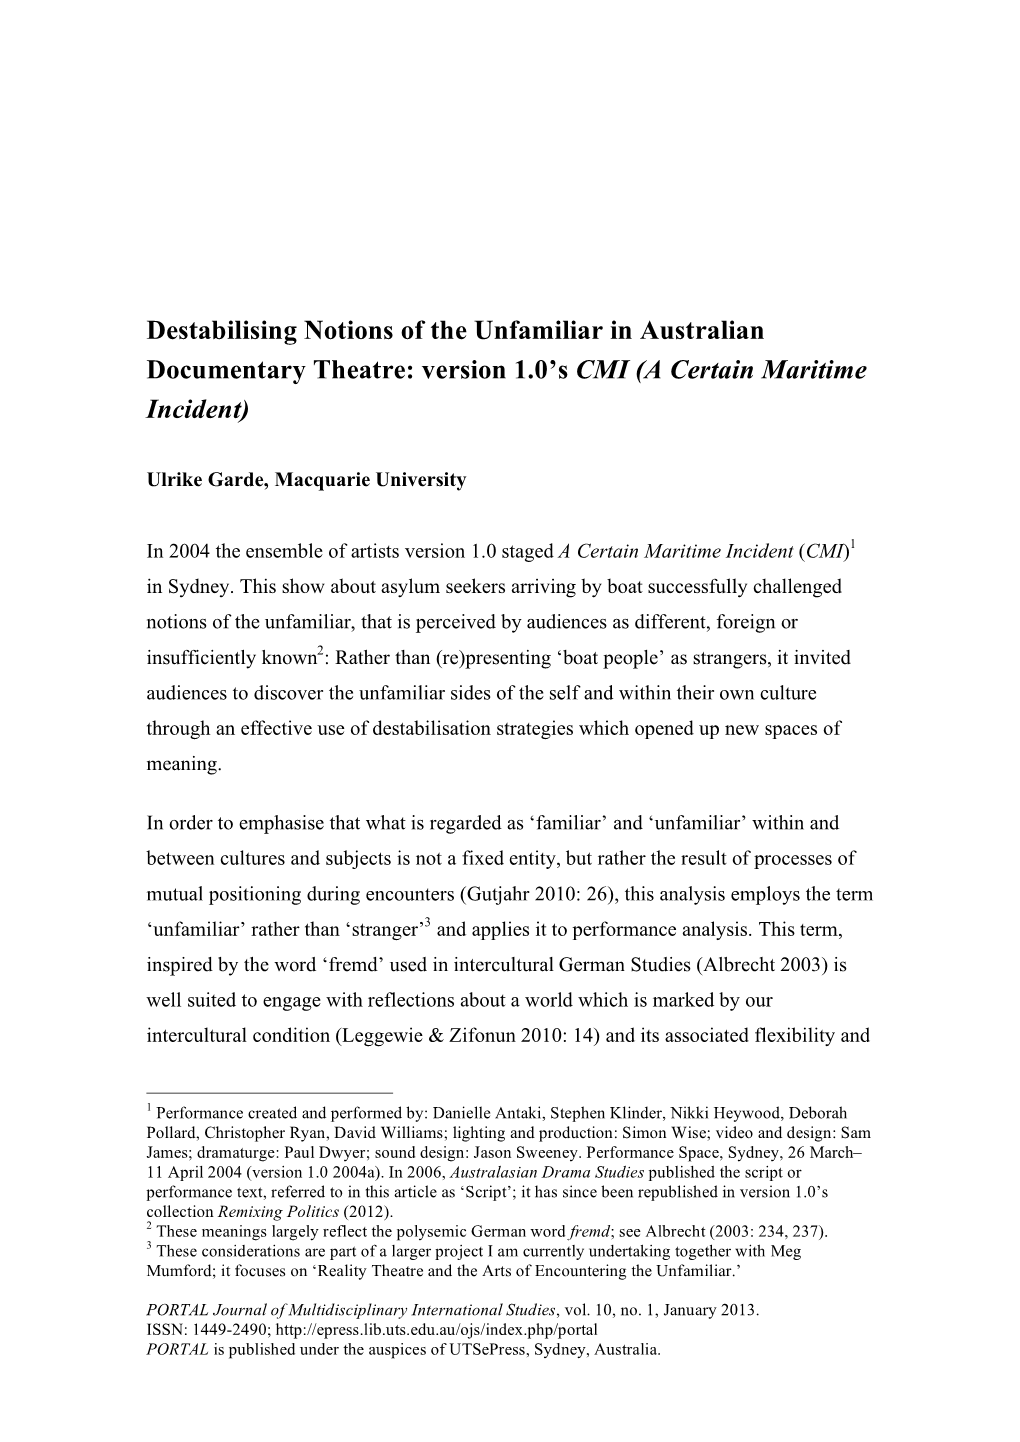 Destabilising Notions of the Unfamiliar in Australian Documentary Theatre: Version 1.0’S CMI (A Certain Maritime Incident)